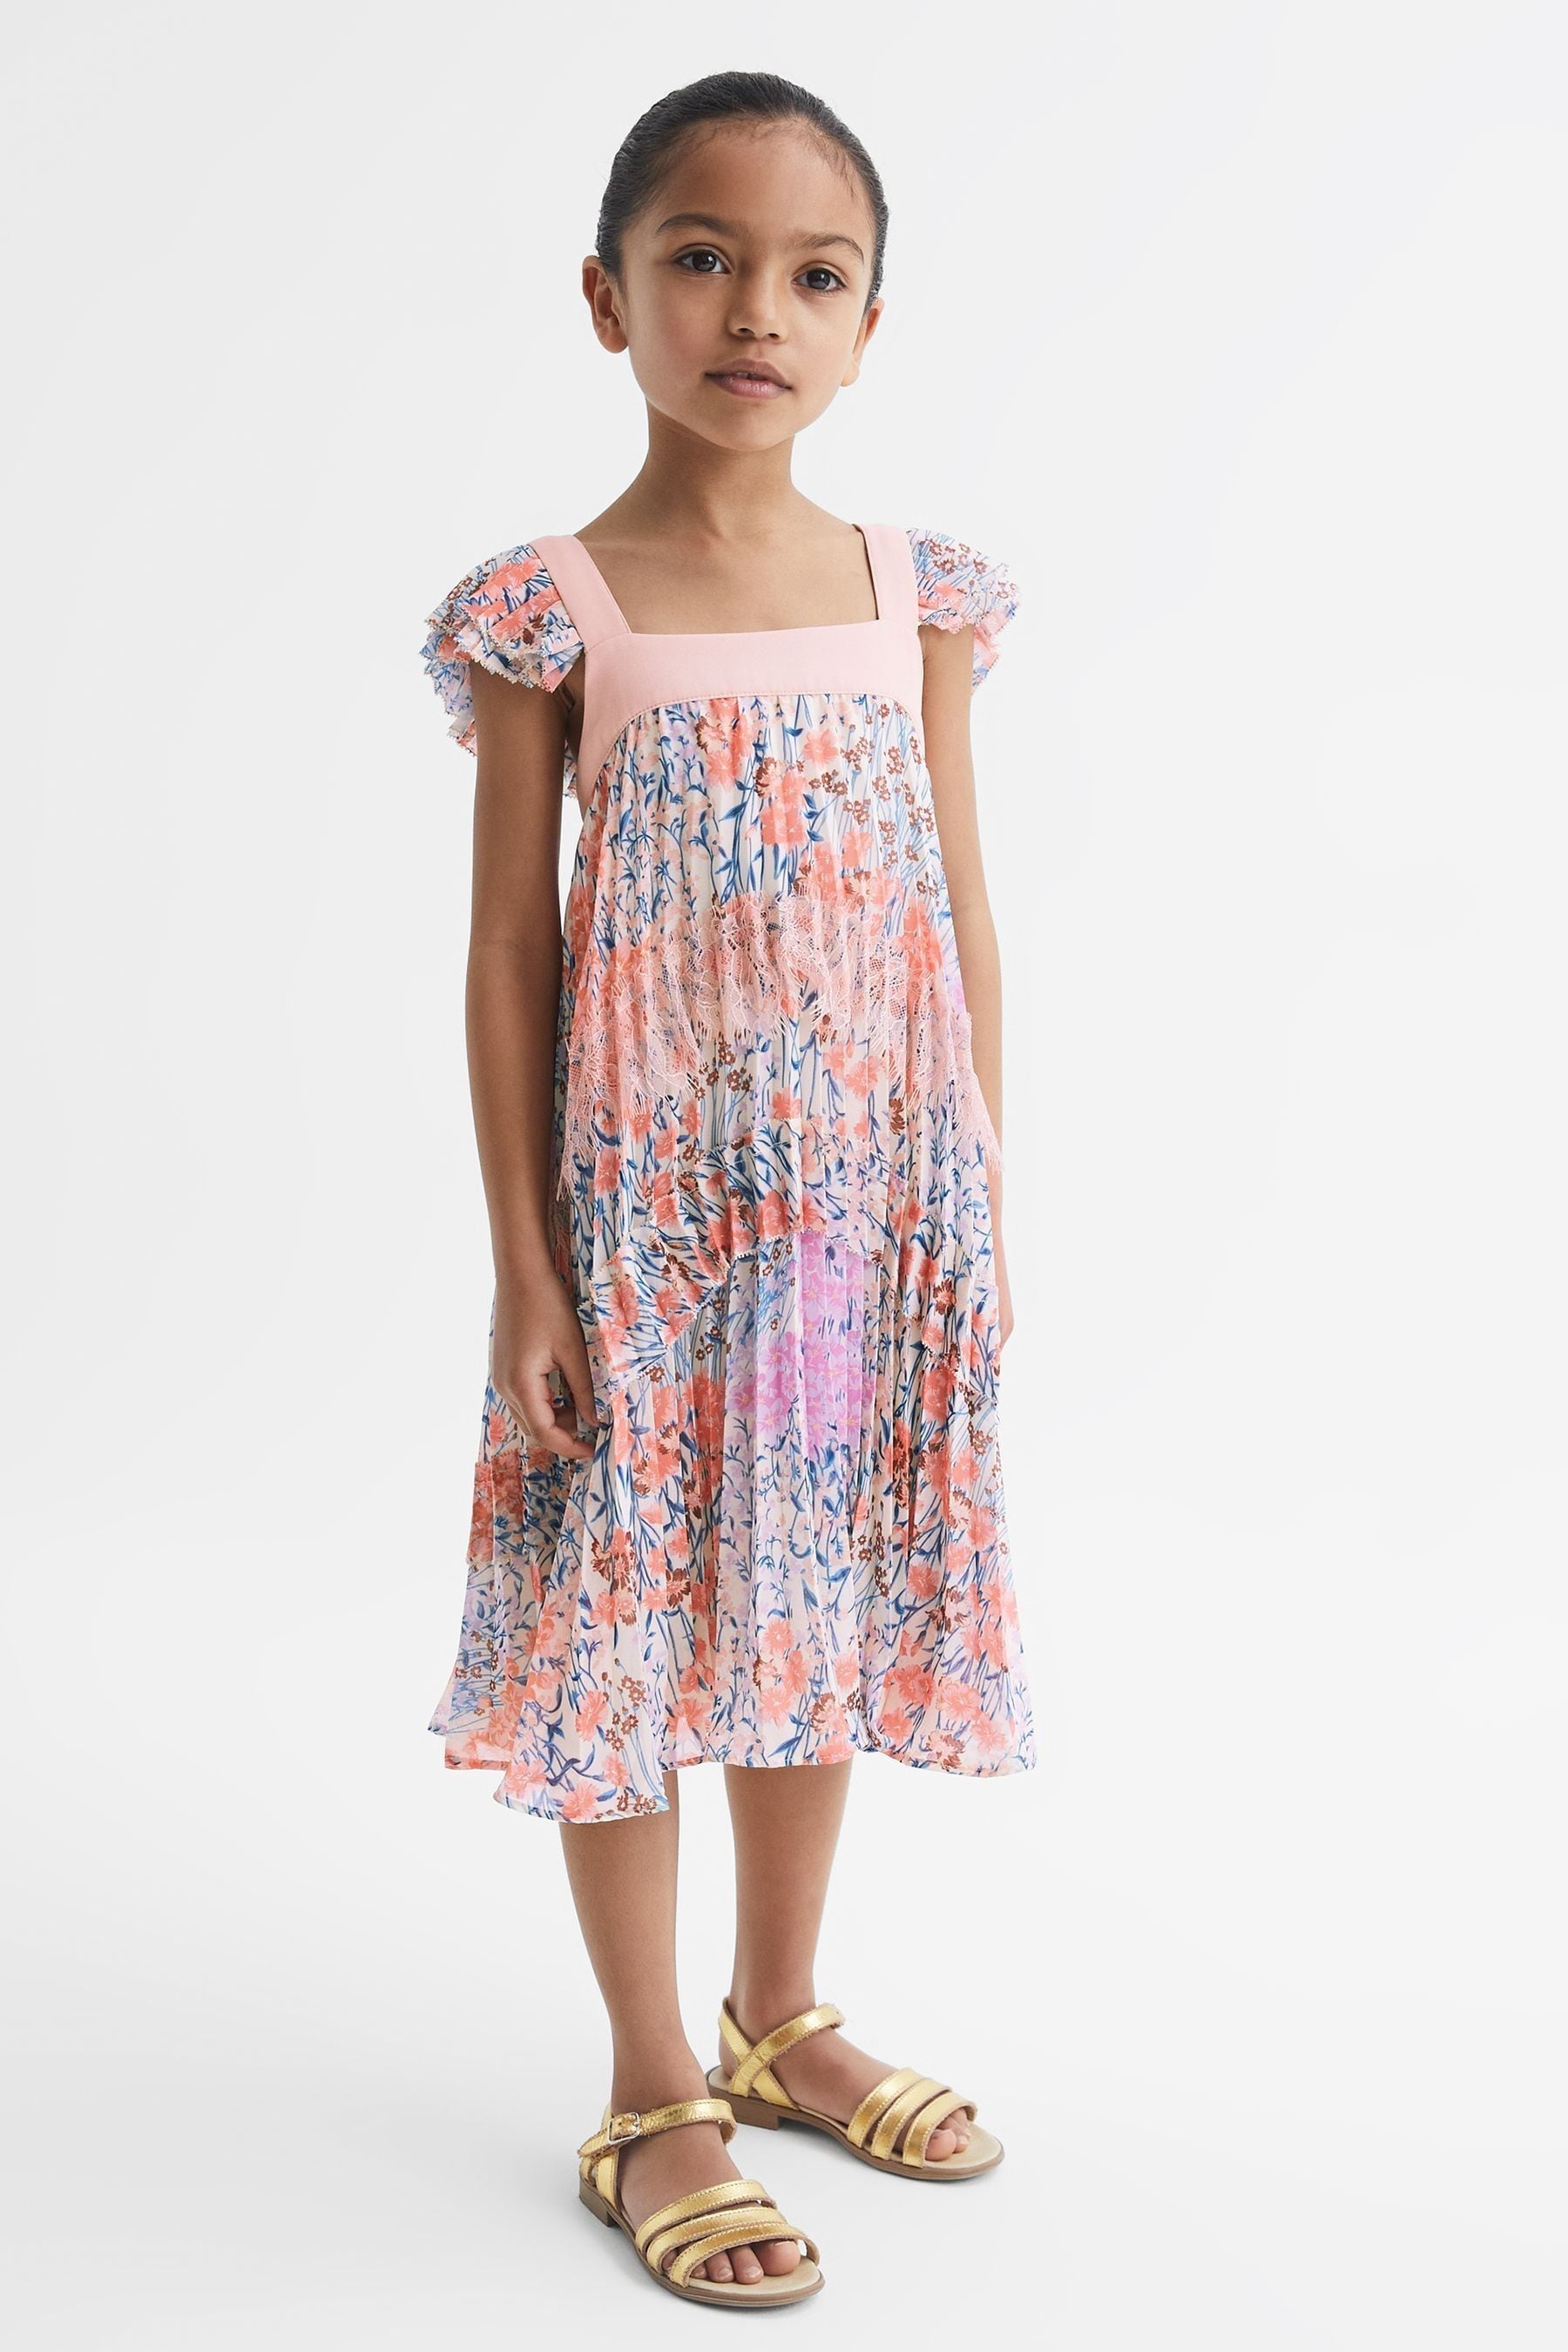 Reiss Kids' Aster - Pink Print Aster Senior Floral Printed Pleated Dress, Uk 11-12 Yrs